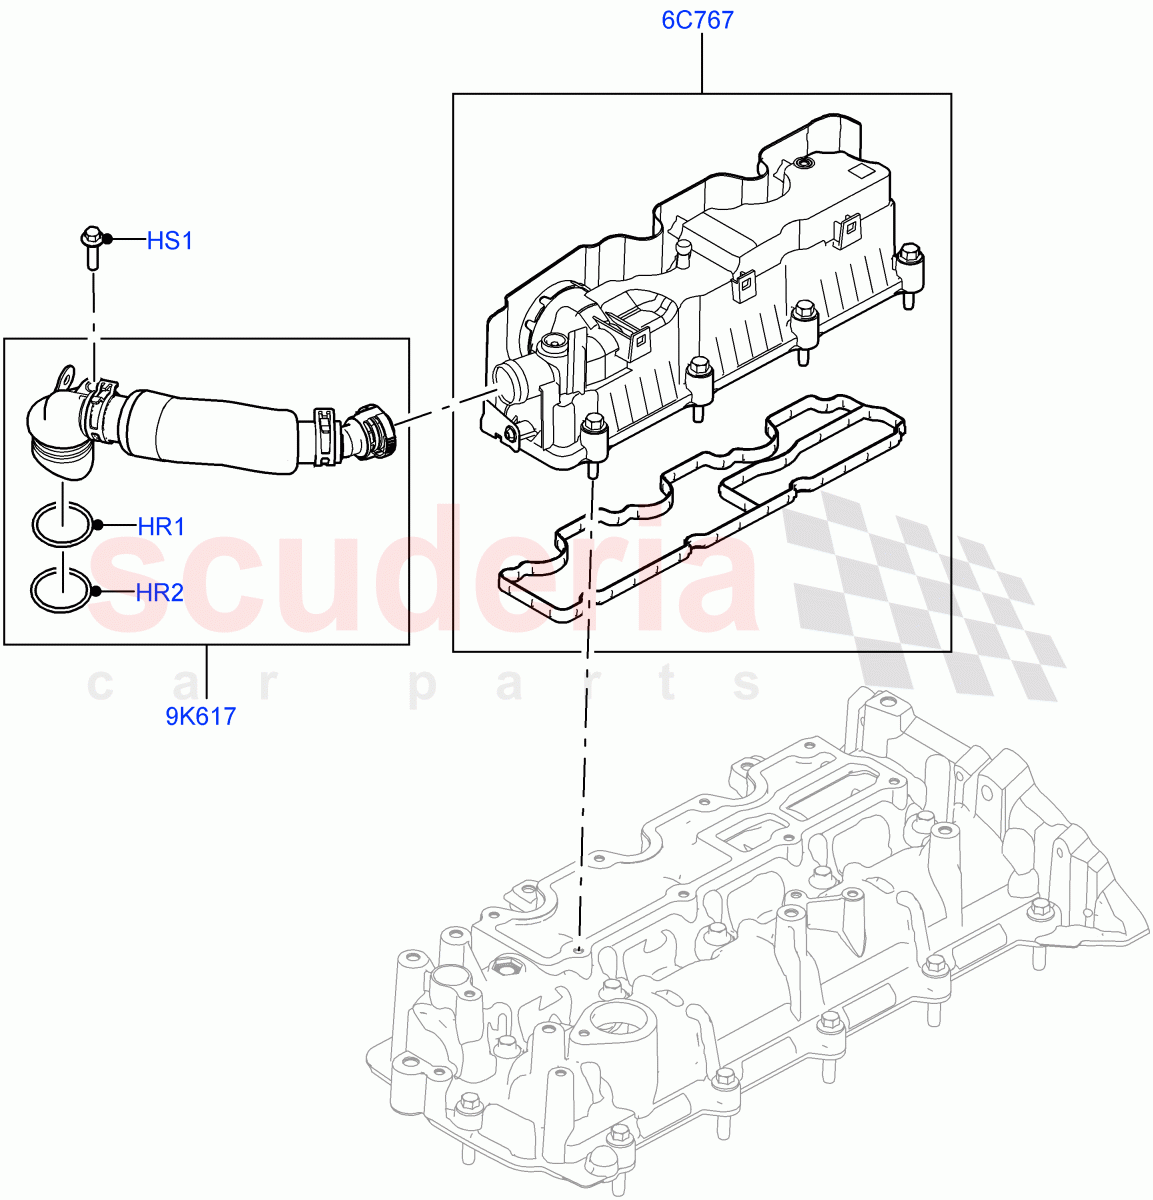 Emission Control - Crankcase(2.0L AJ21D4 Diesel Mid)((V)FROMMA000001) of Land Rover Land Rover Range Rover Velar (2017+) [2.0 Turbo Diesel AJ21D4]